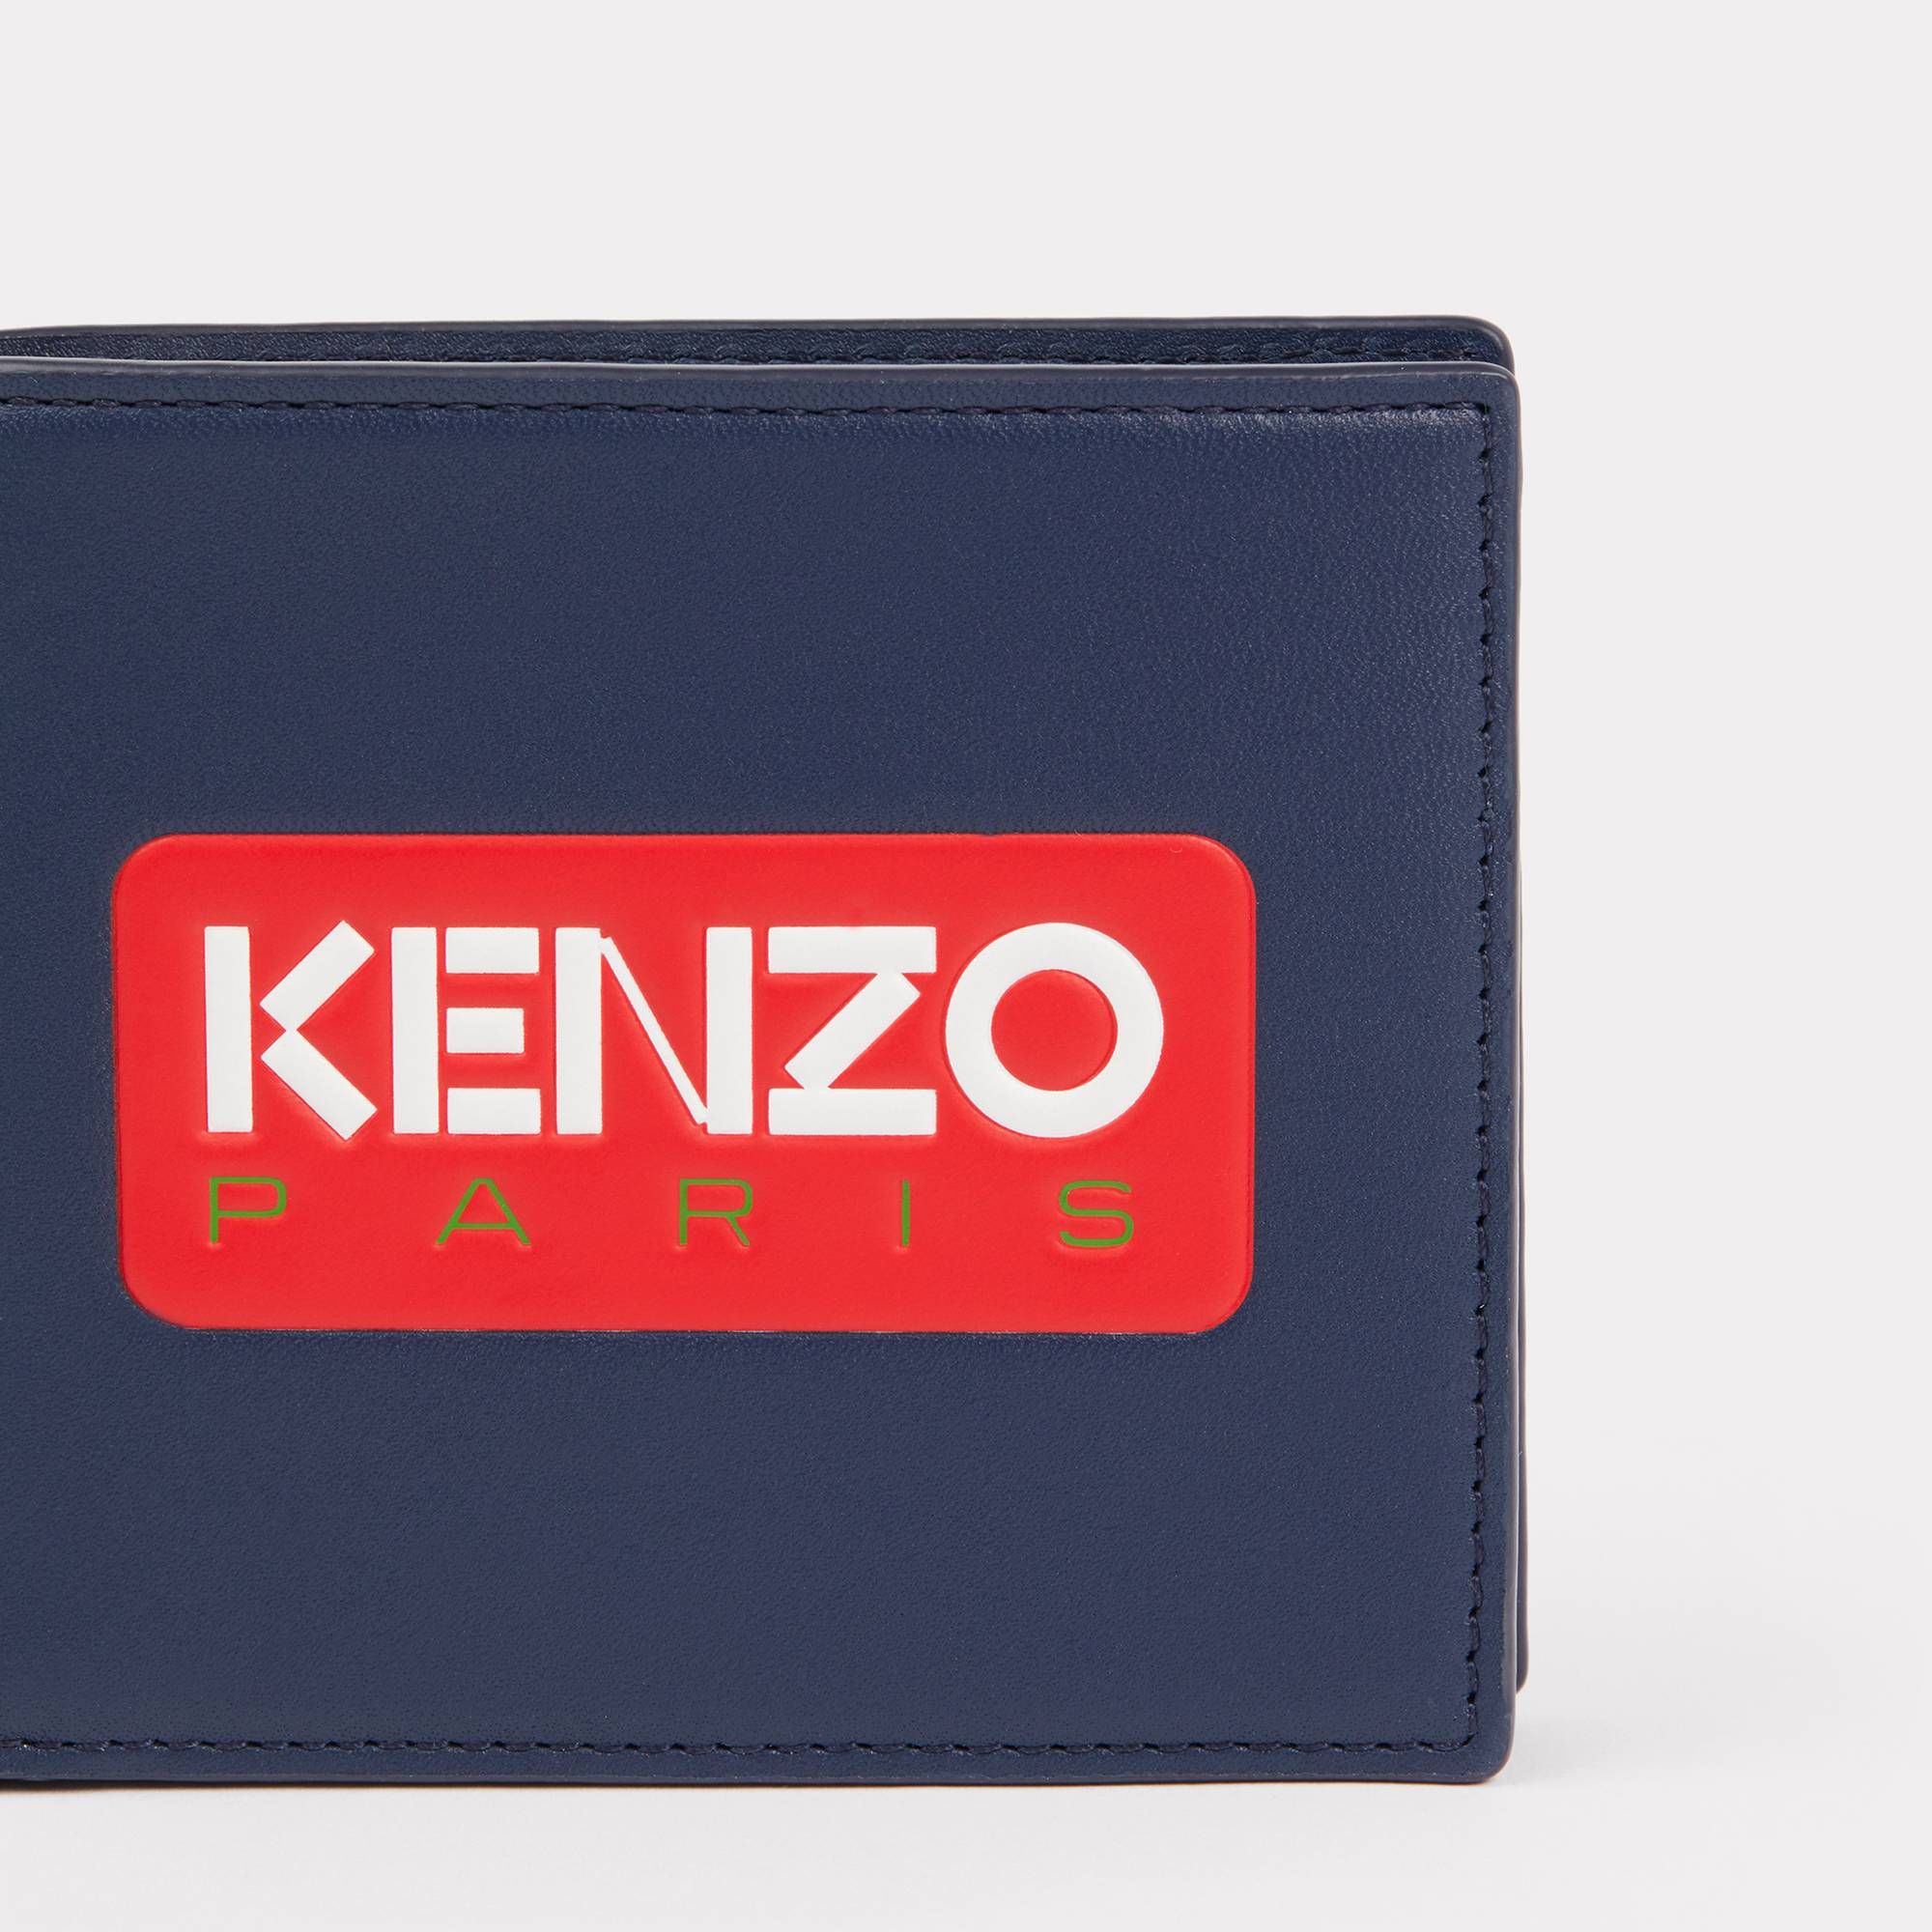  KENZO Paris Leather Wallet - Navy 